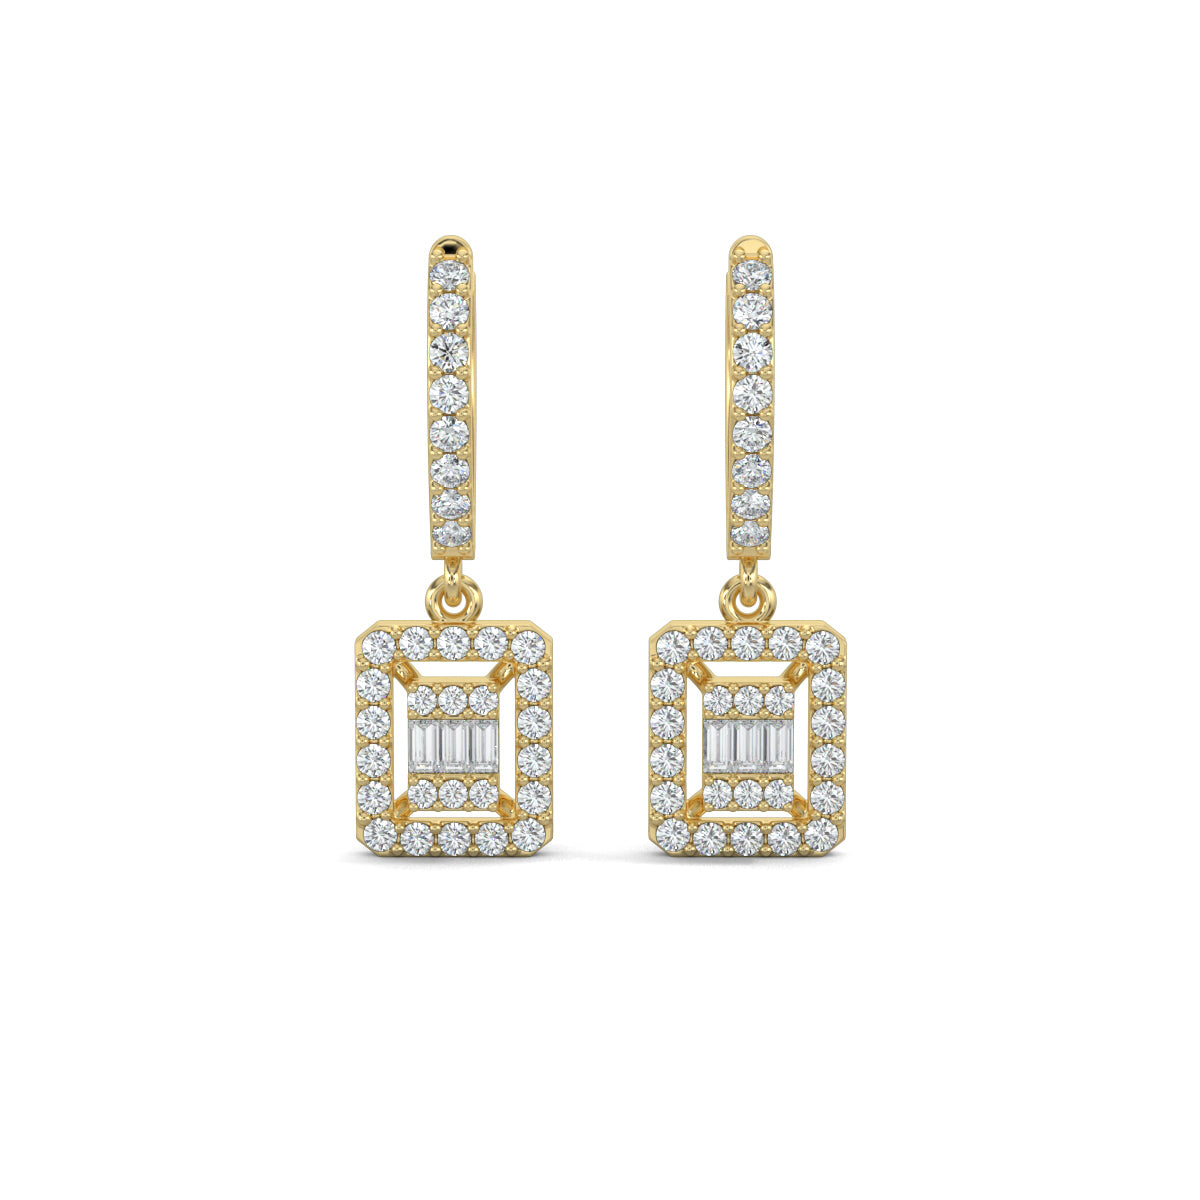 Yellow Gold, Natural diamond earrings, Lab-grown diamond earrings, Elegant Dangler drop Earrings, Pave setting, Halo setting, Modern diamond earrings, Sophisticated jewelry, Diamond drop earrings, Graceful dangler earrings.